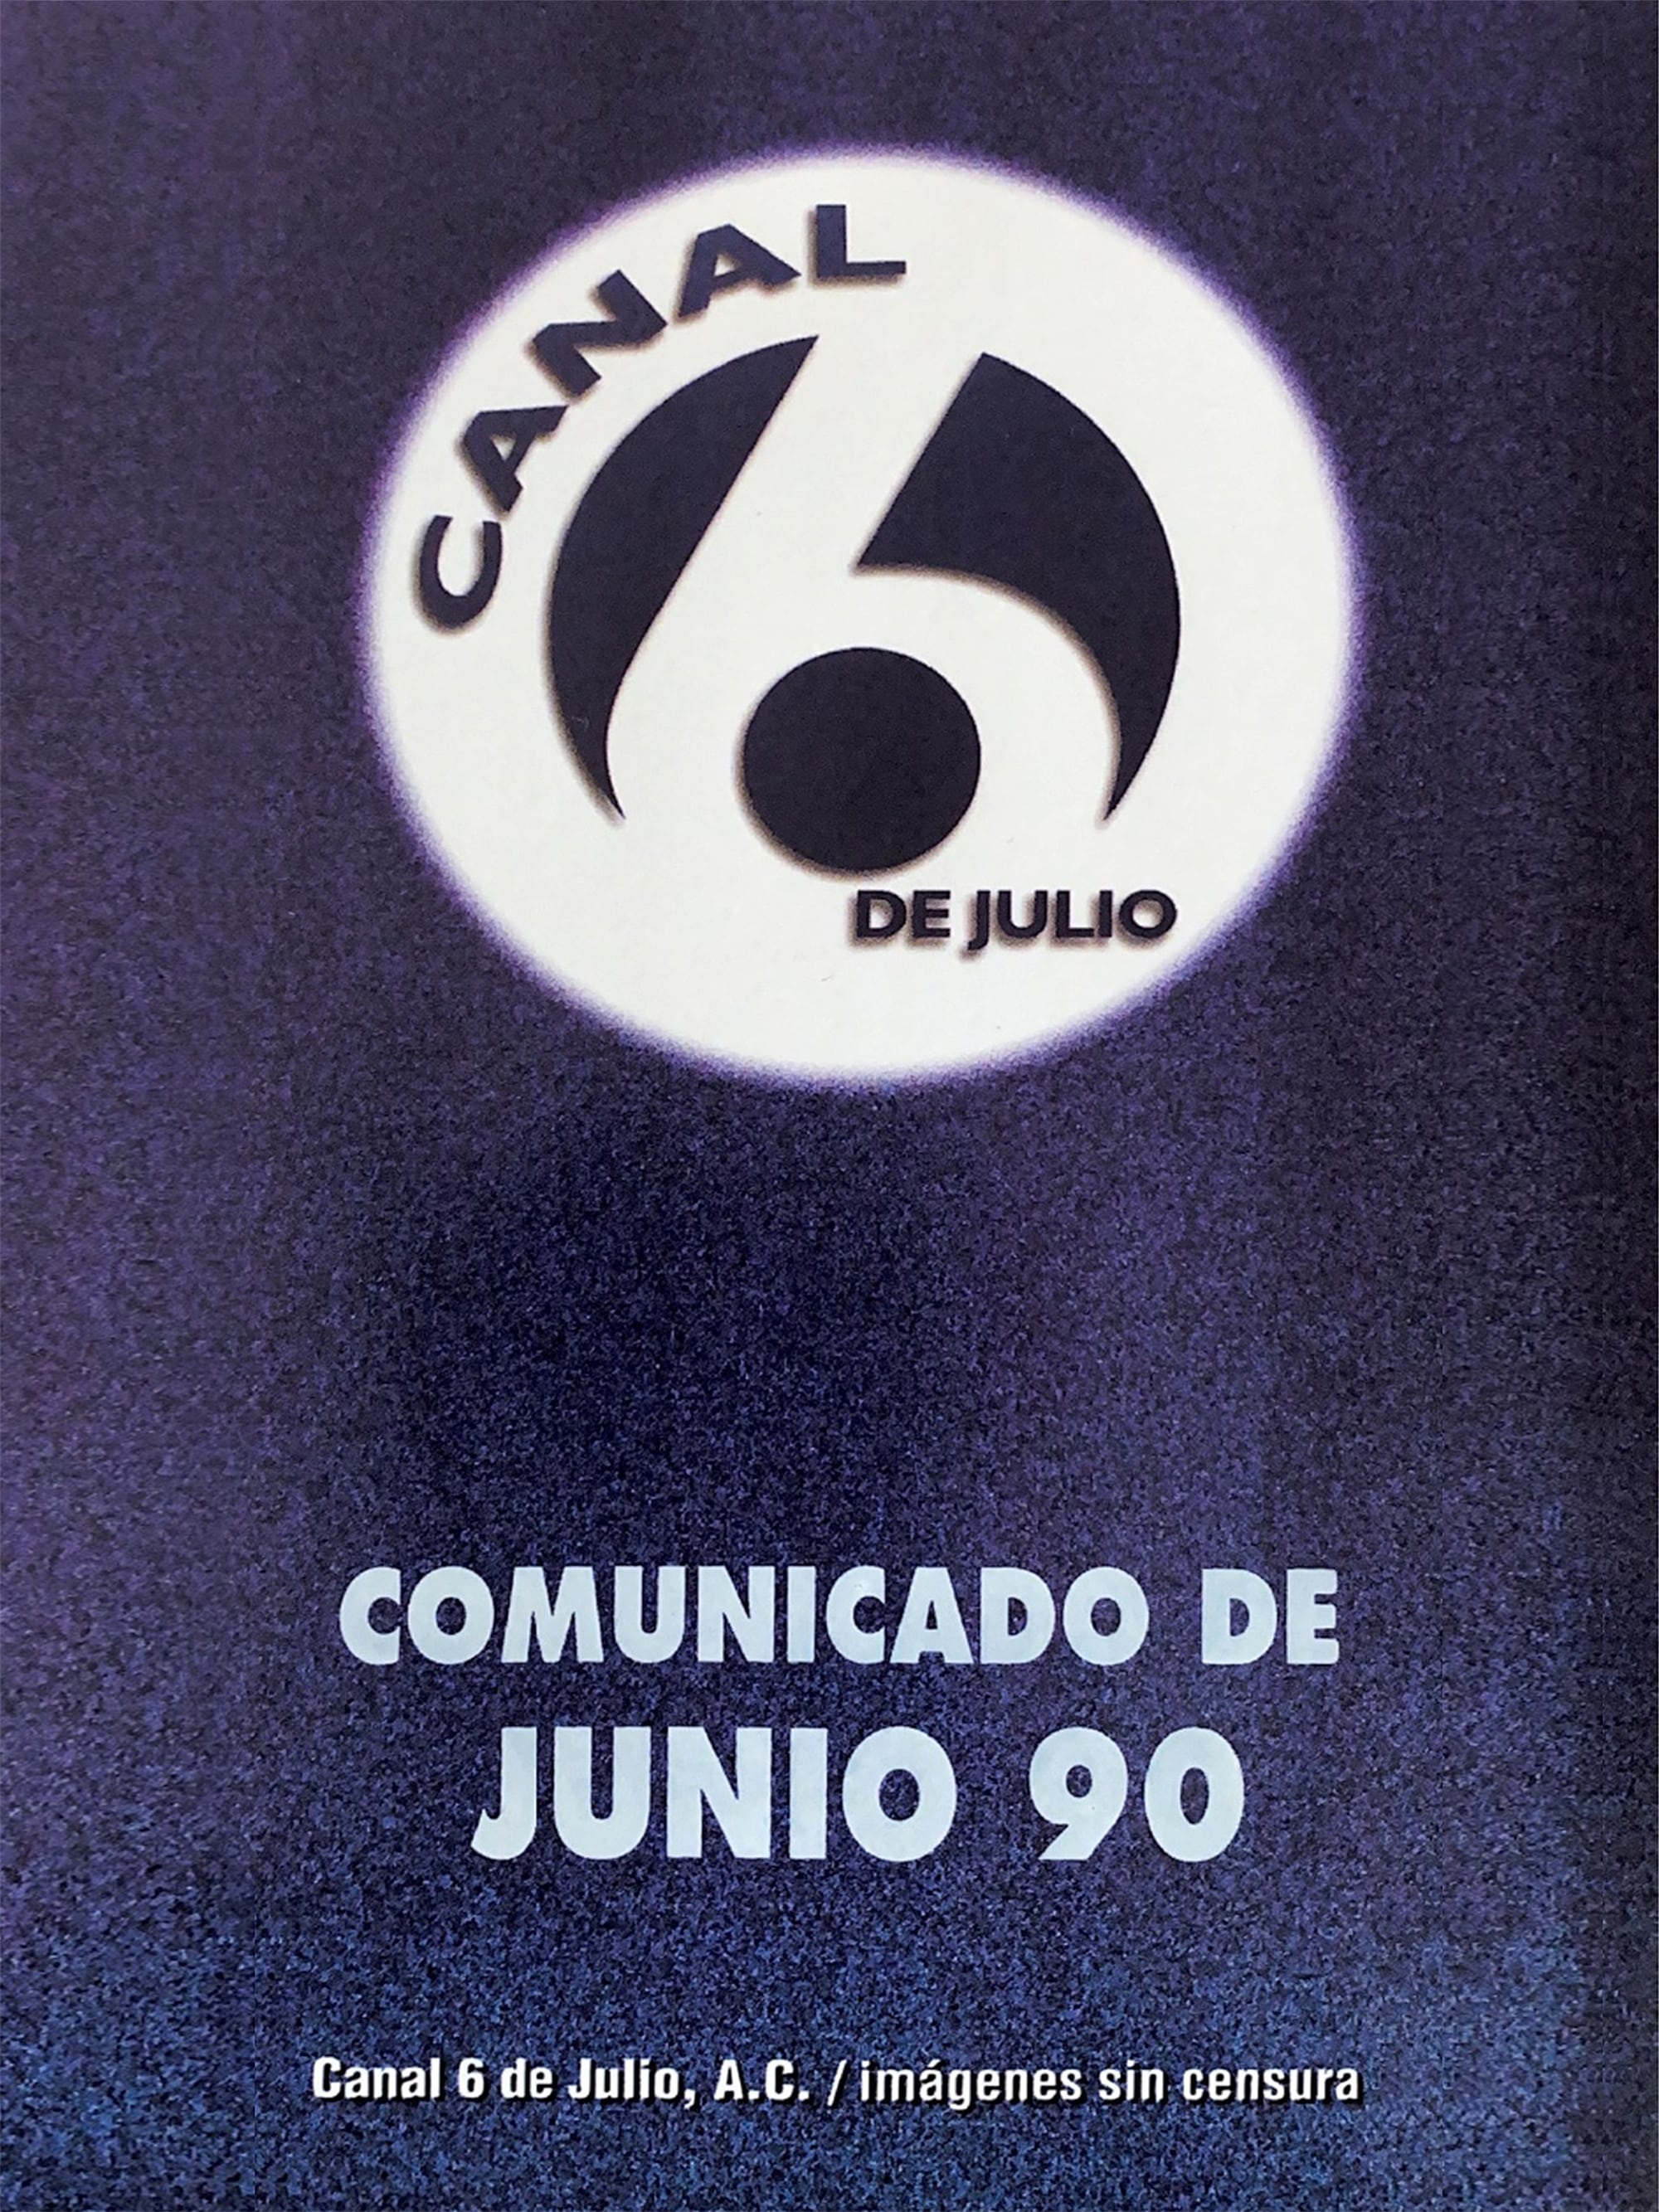 Comunicado de junio '90